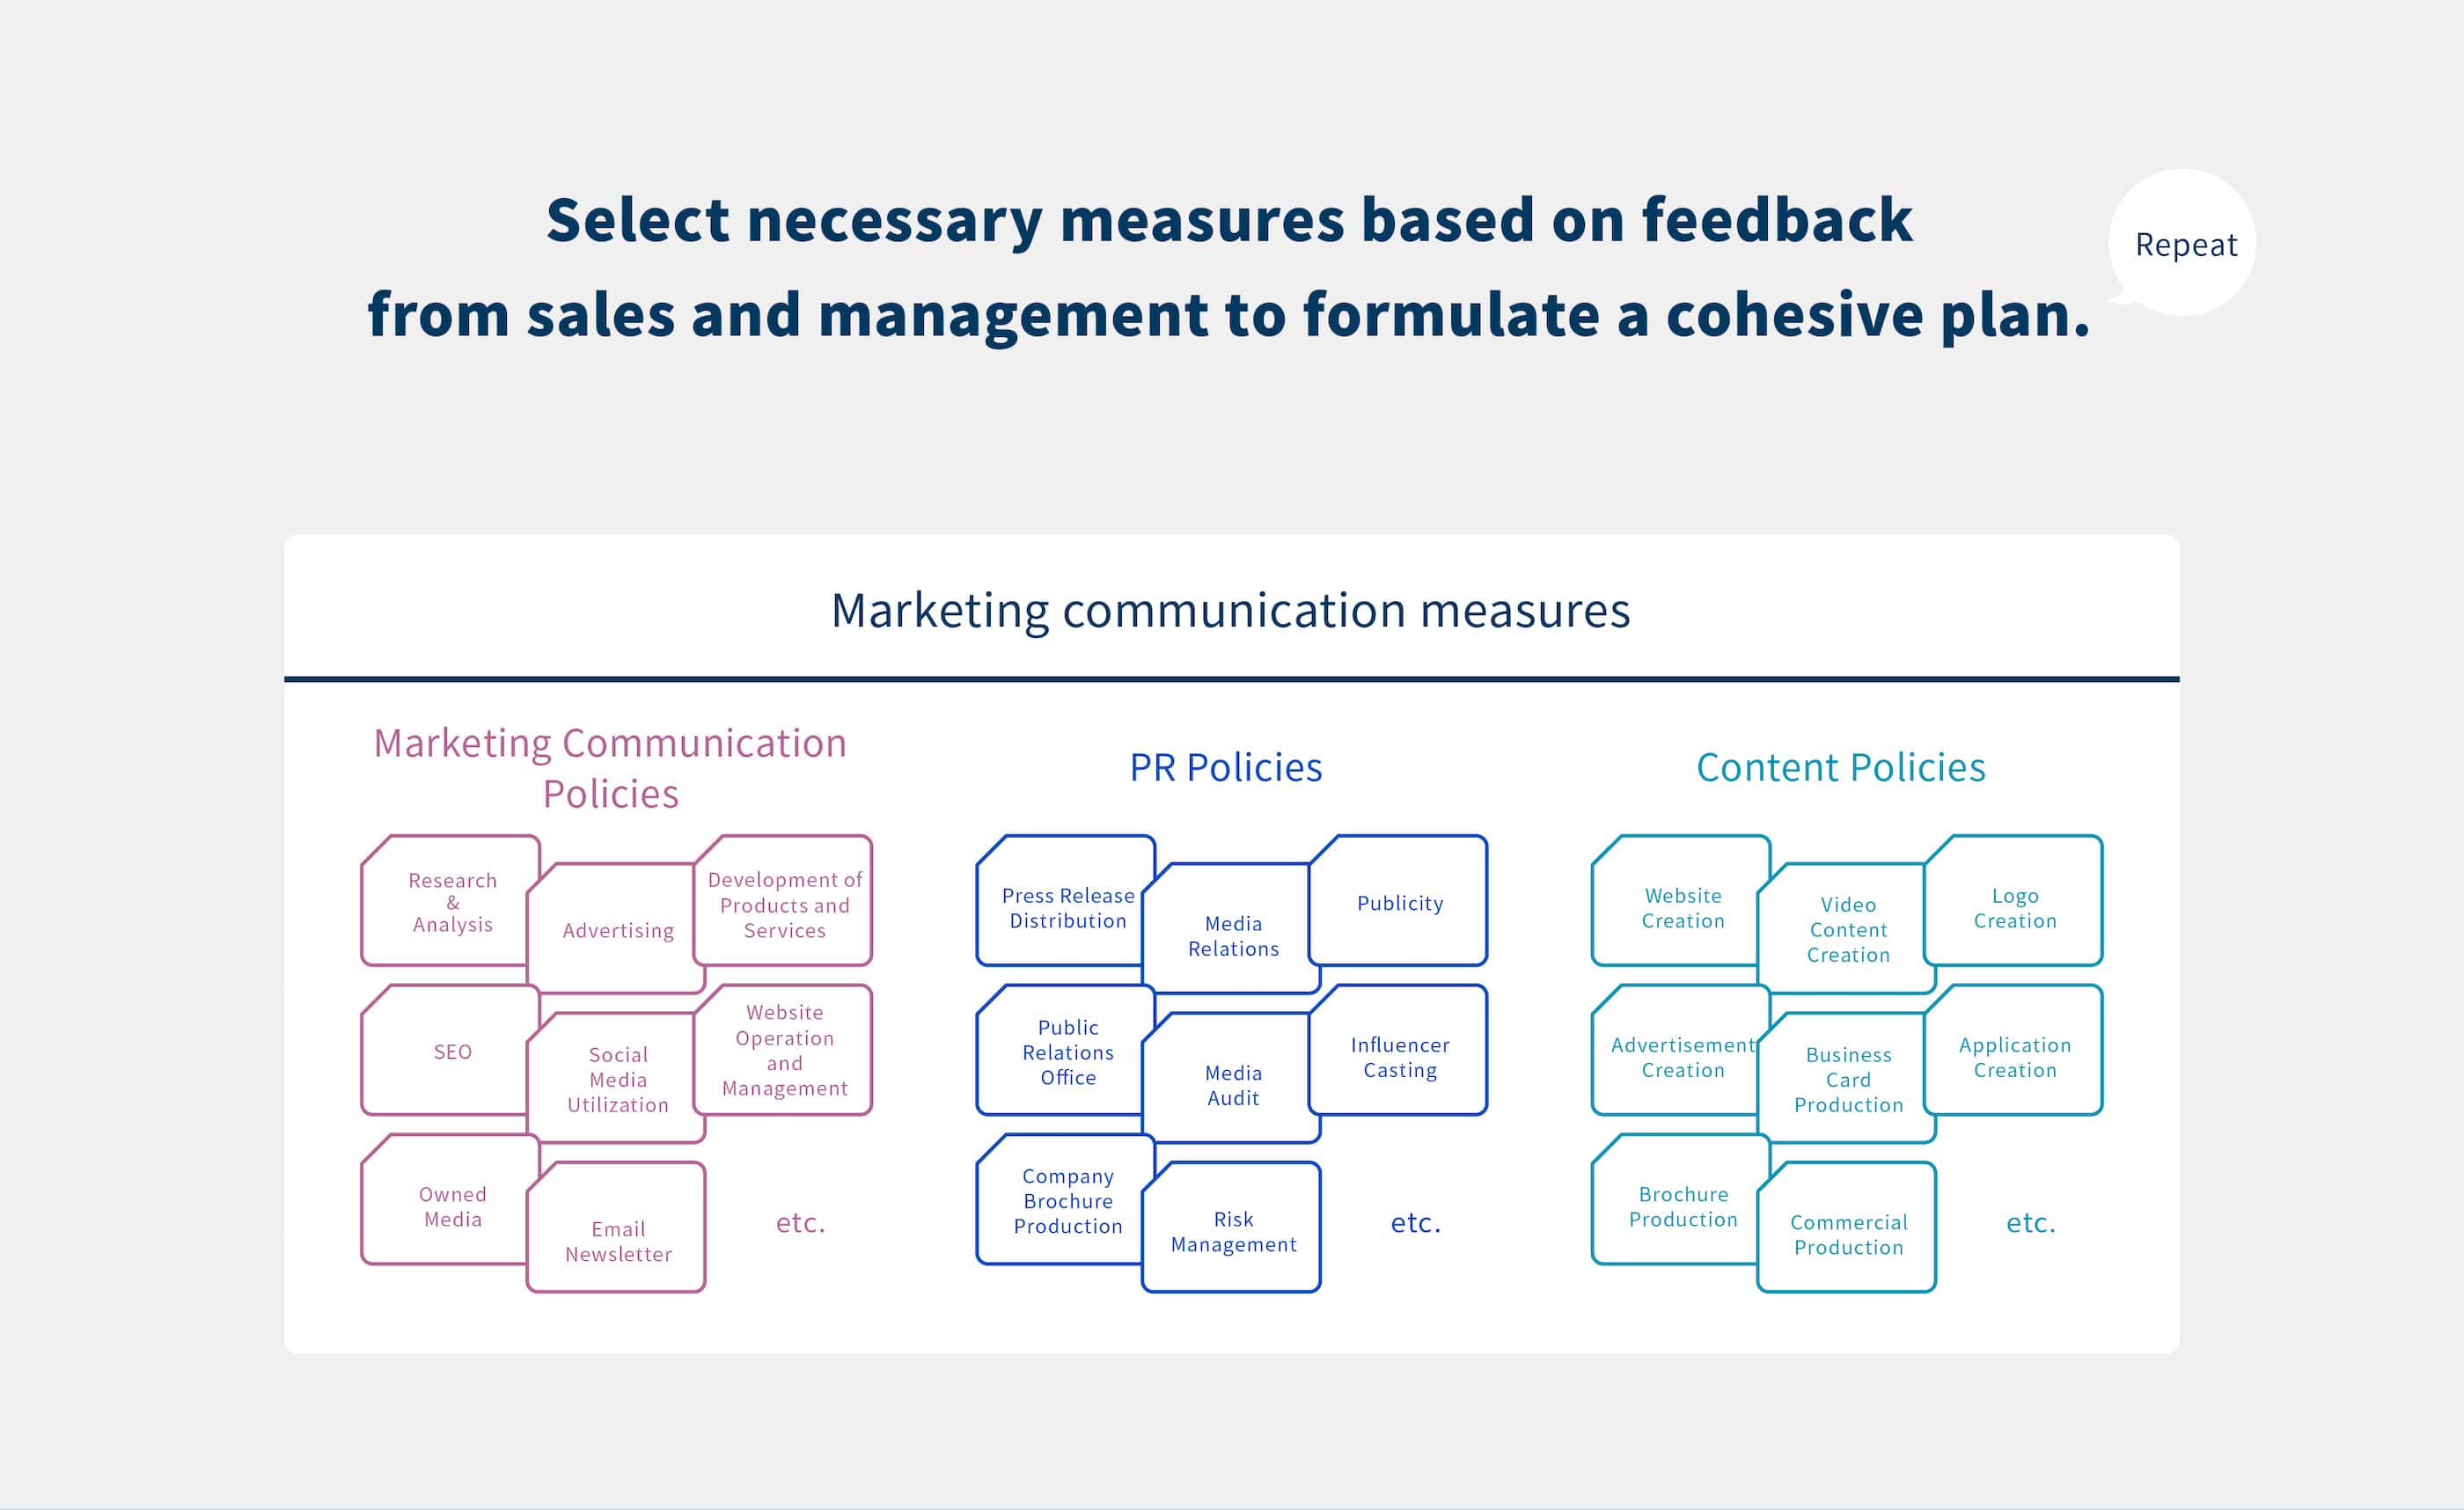 Explanation regarding marketing communication measures